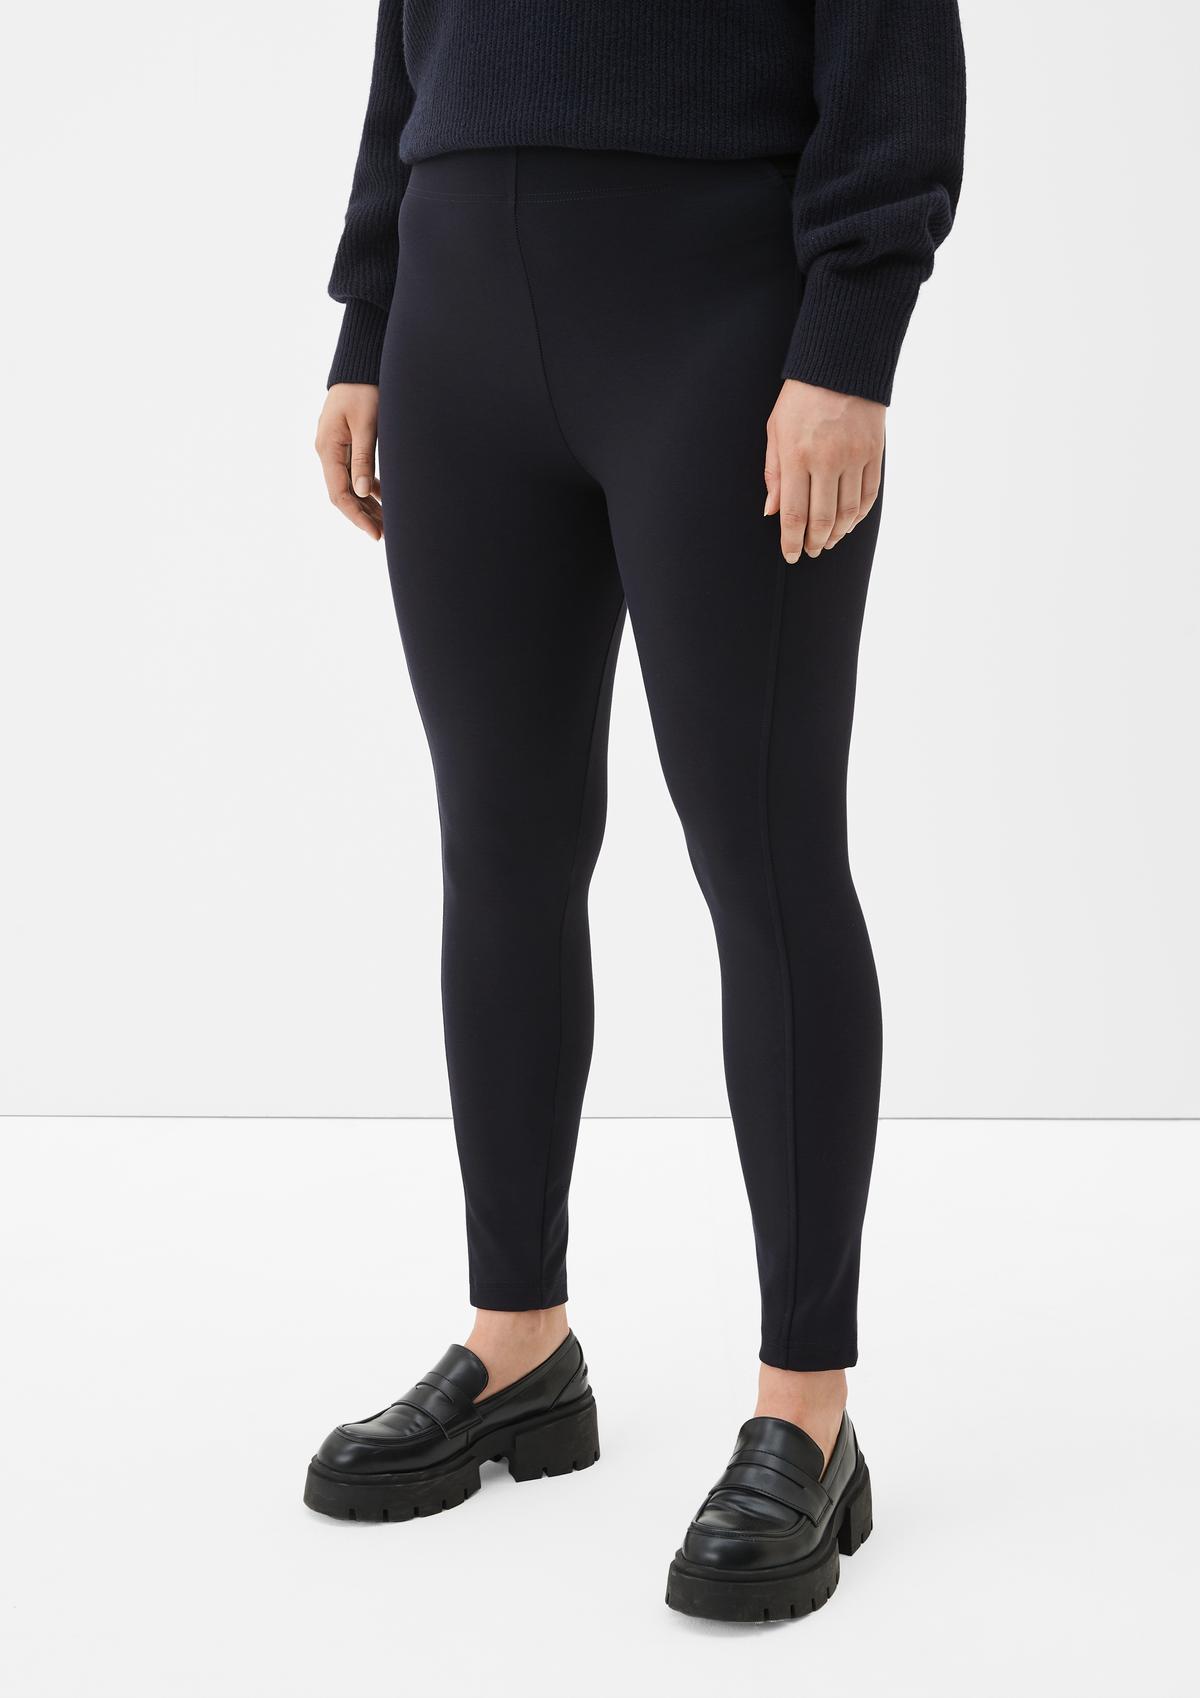 H&M Jersey Leggings  Leggings, Women's leggings, Workout